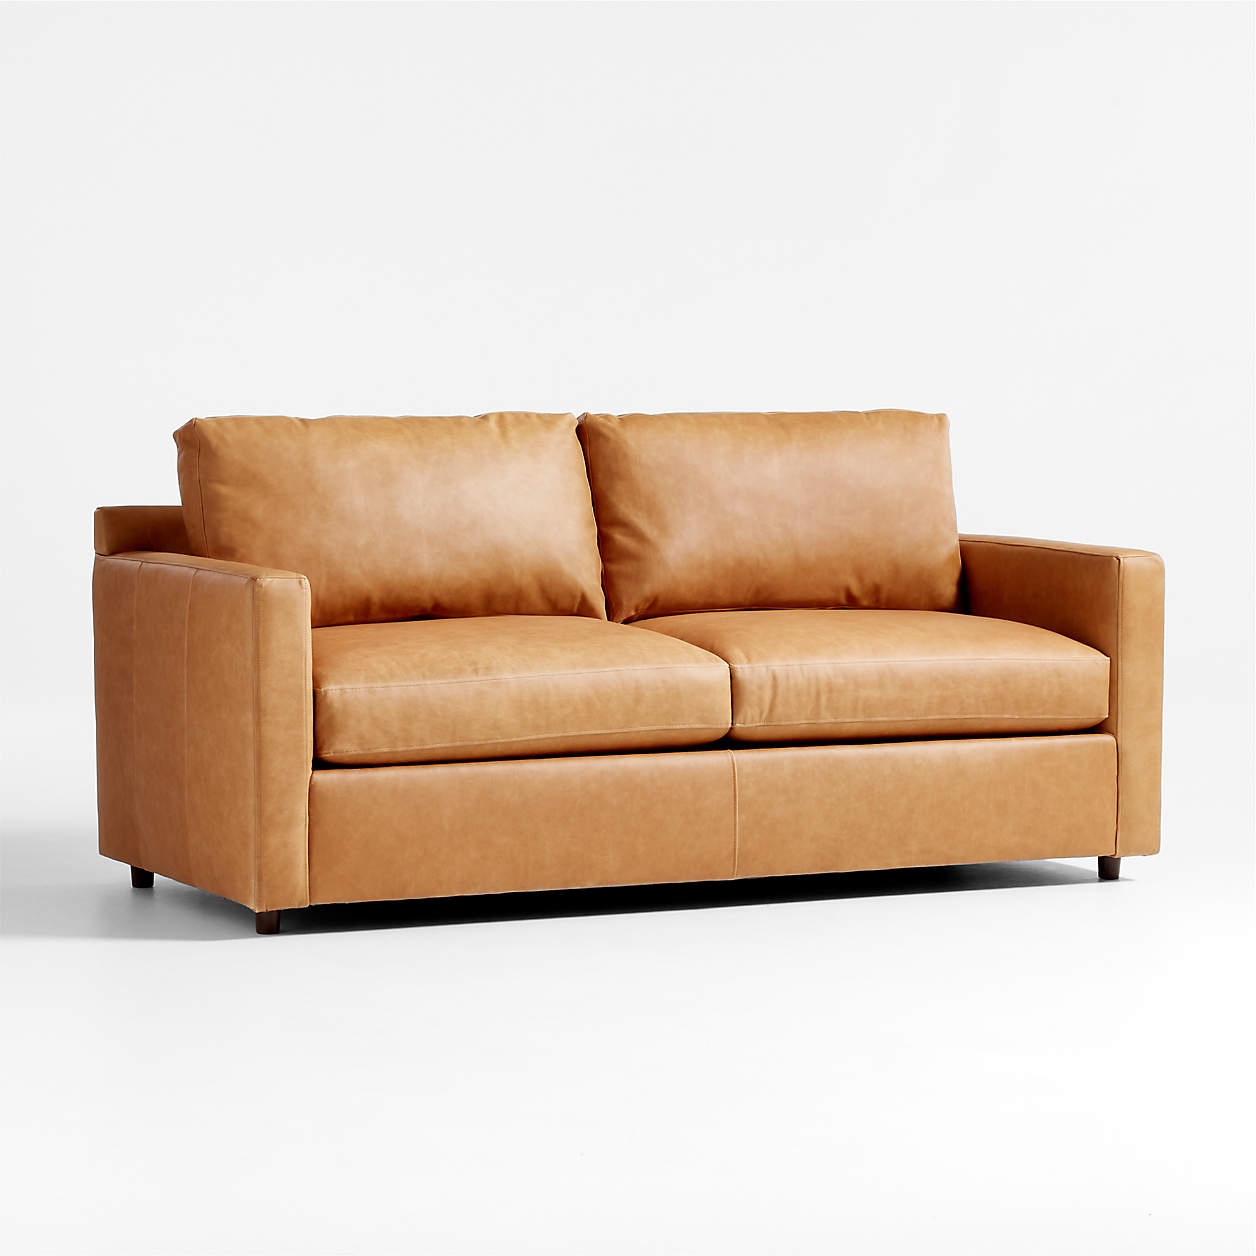 Barrett II Leather 2-Seat Queen Sleeper Sofa - Image 3